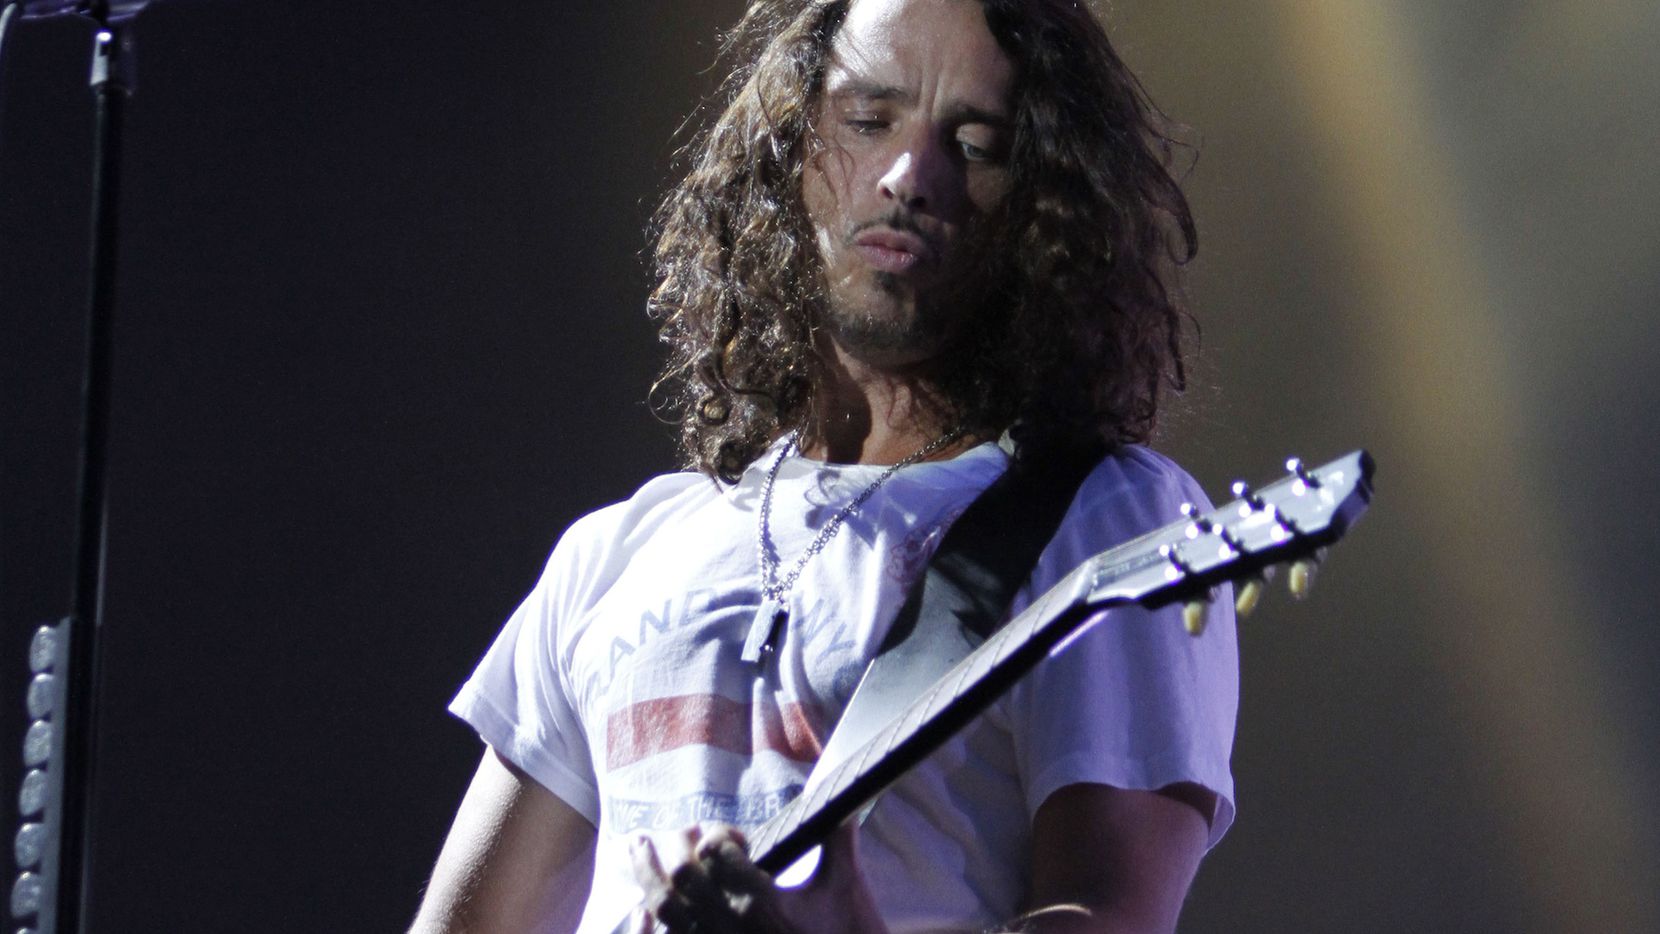 El cantante Chris Cornell, vocalista de Soundgarden AP
